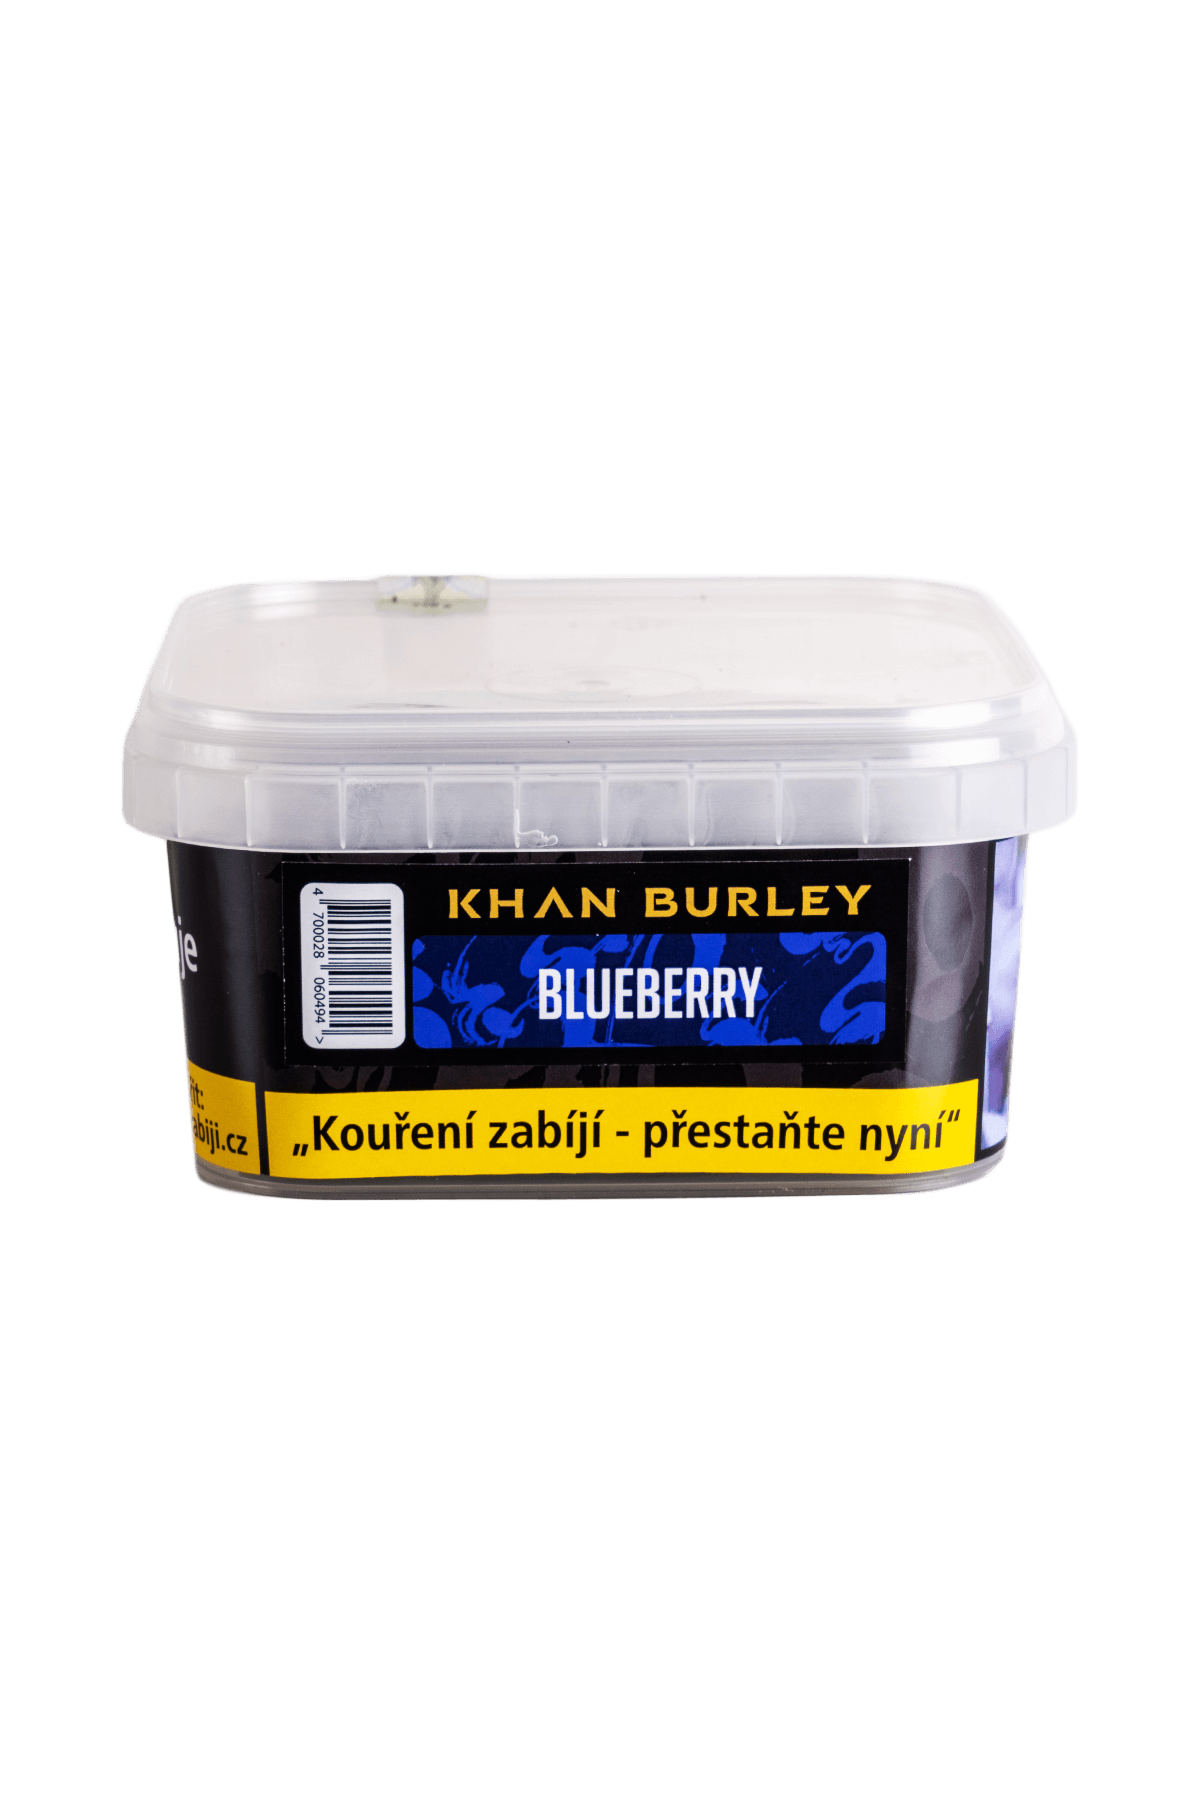 Tabák - Khan Burley 250g - Blue Berry